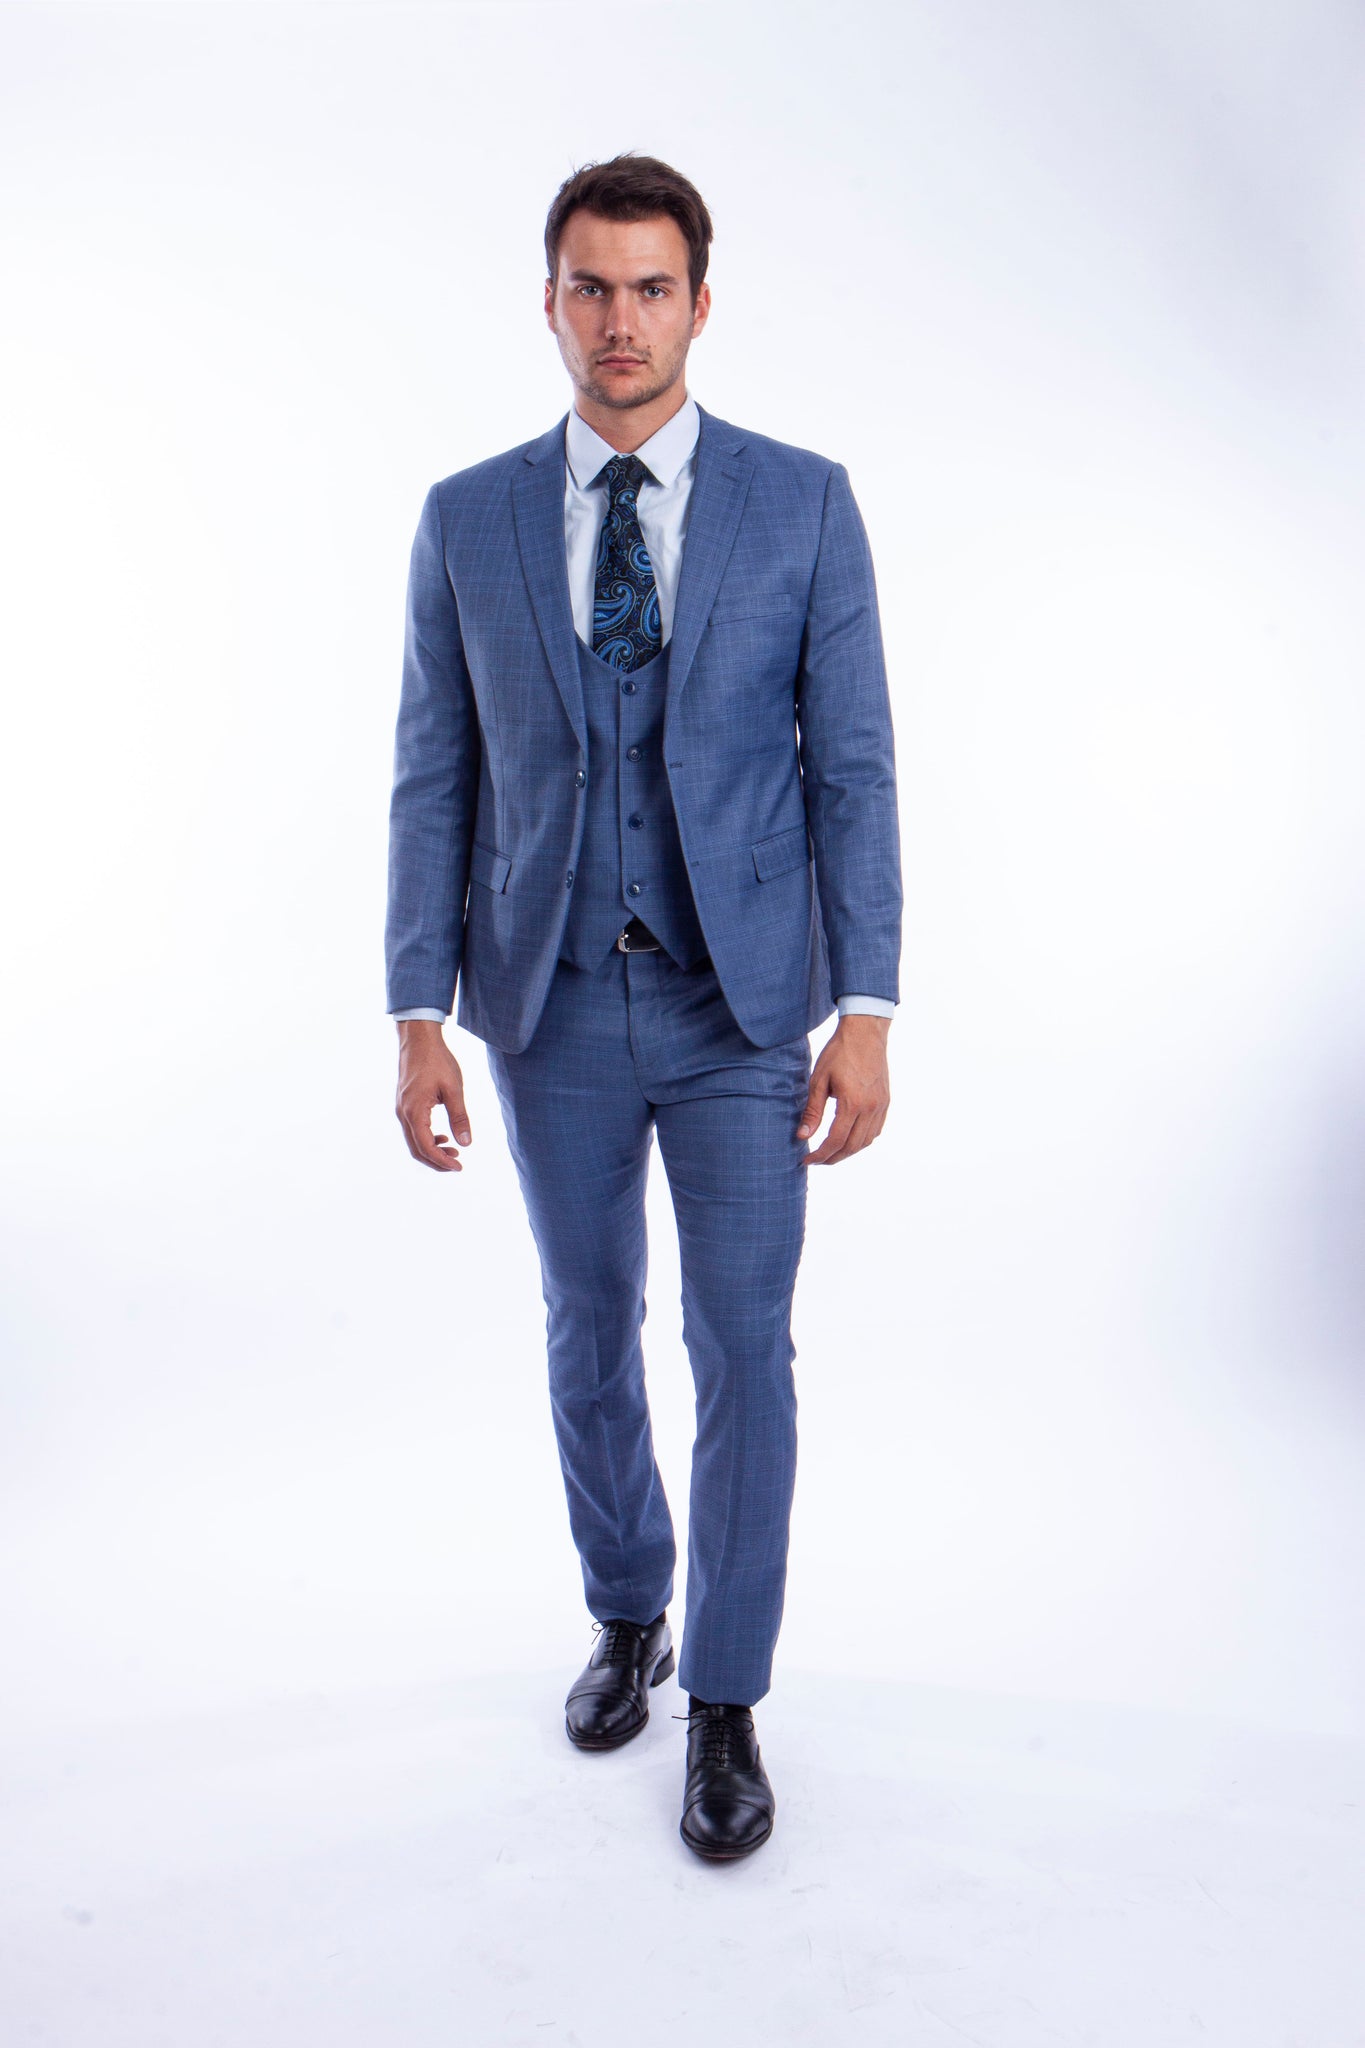 Med Blue Suit For Men Formal Suits For All Ocassions